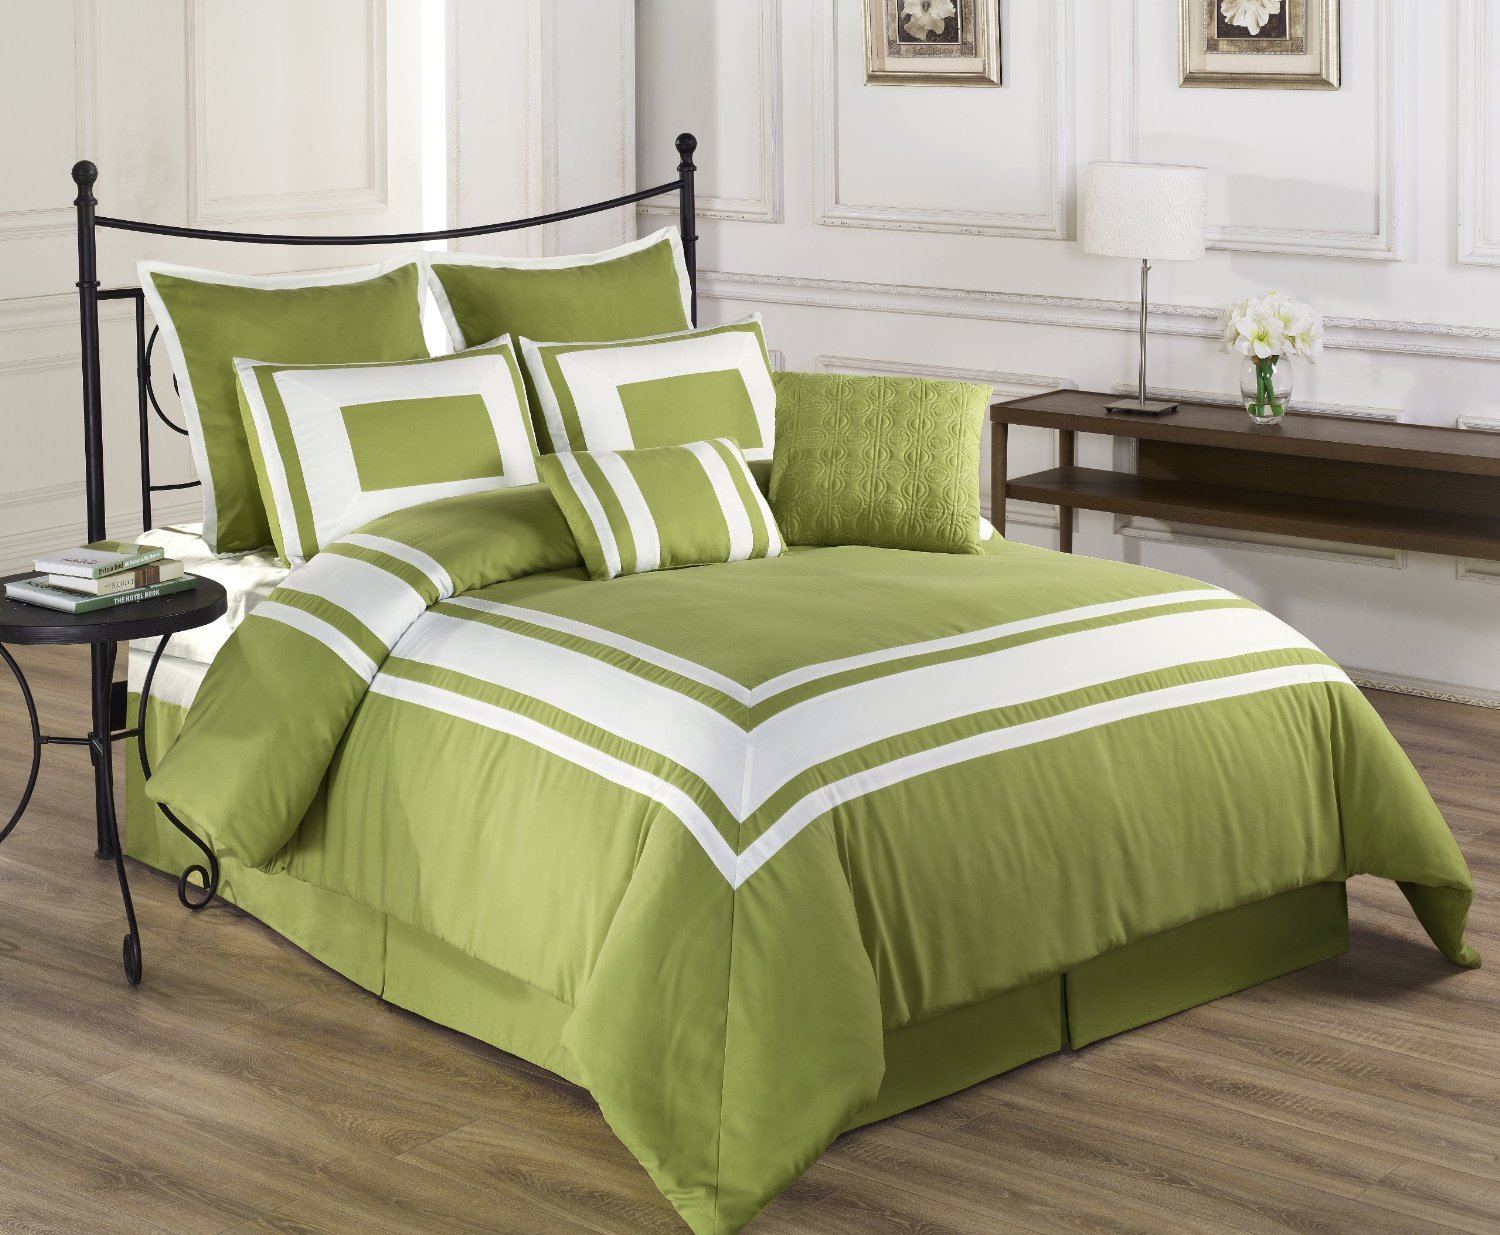 traditional-green-bedspread